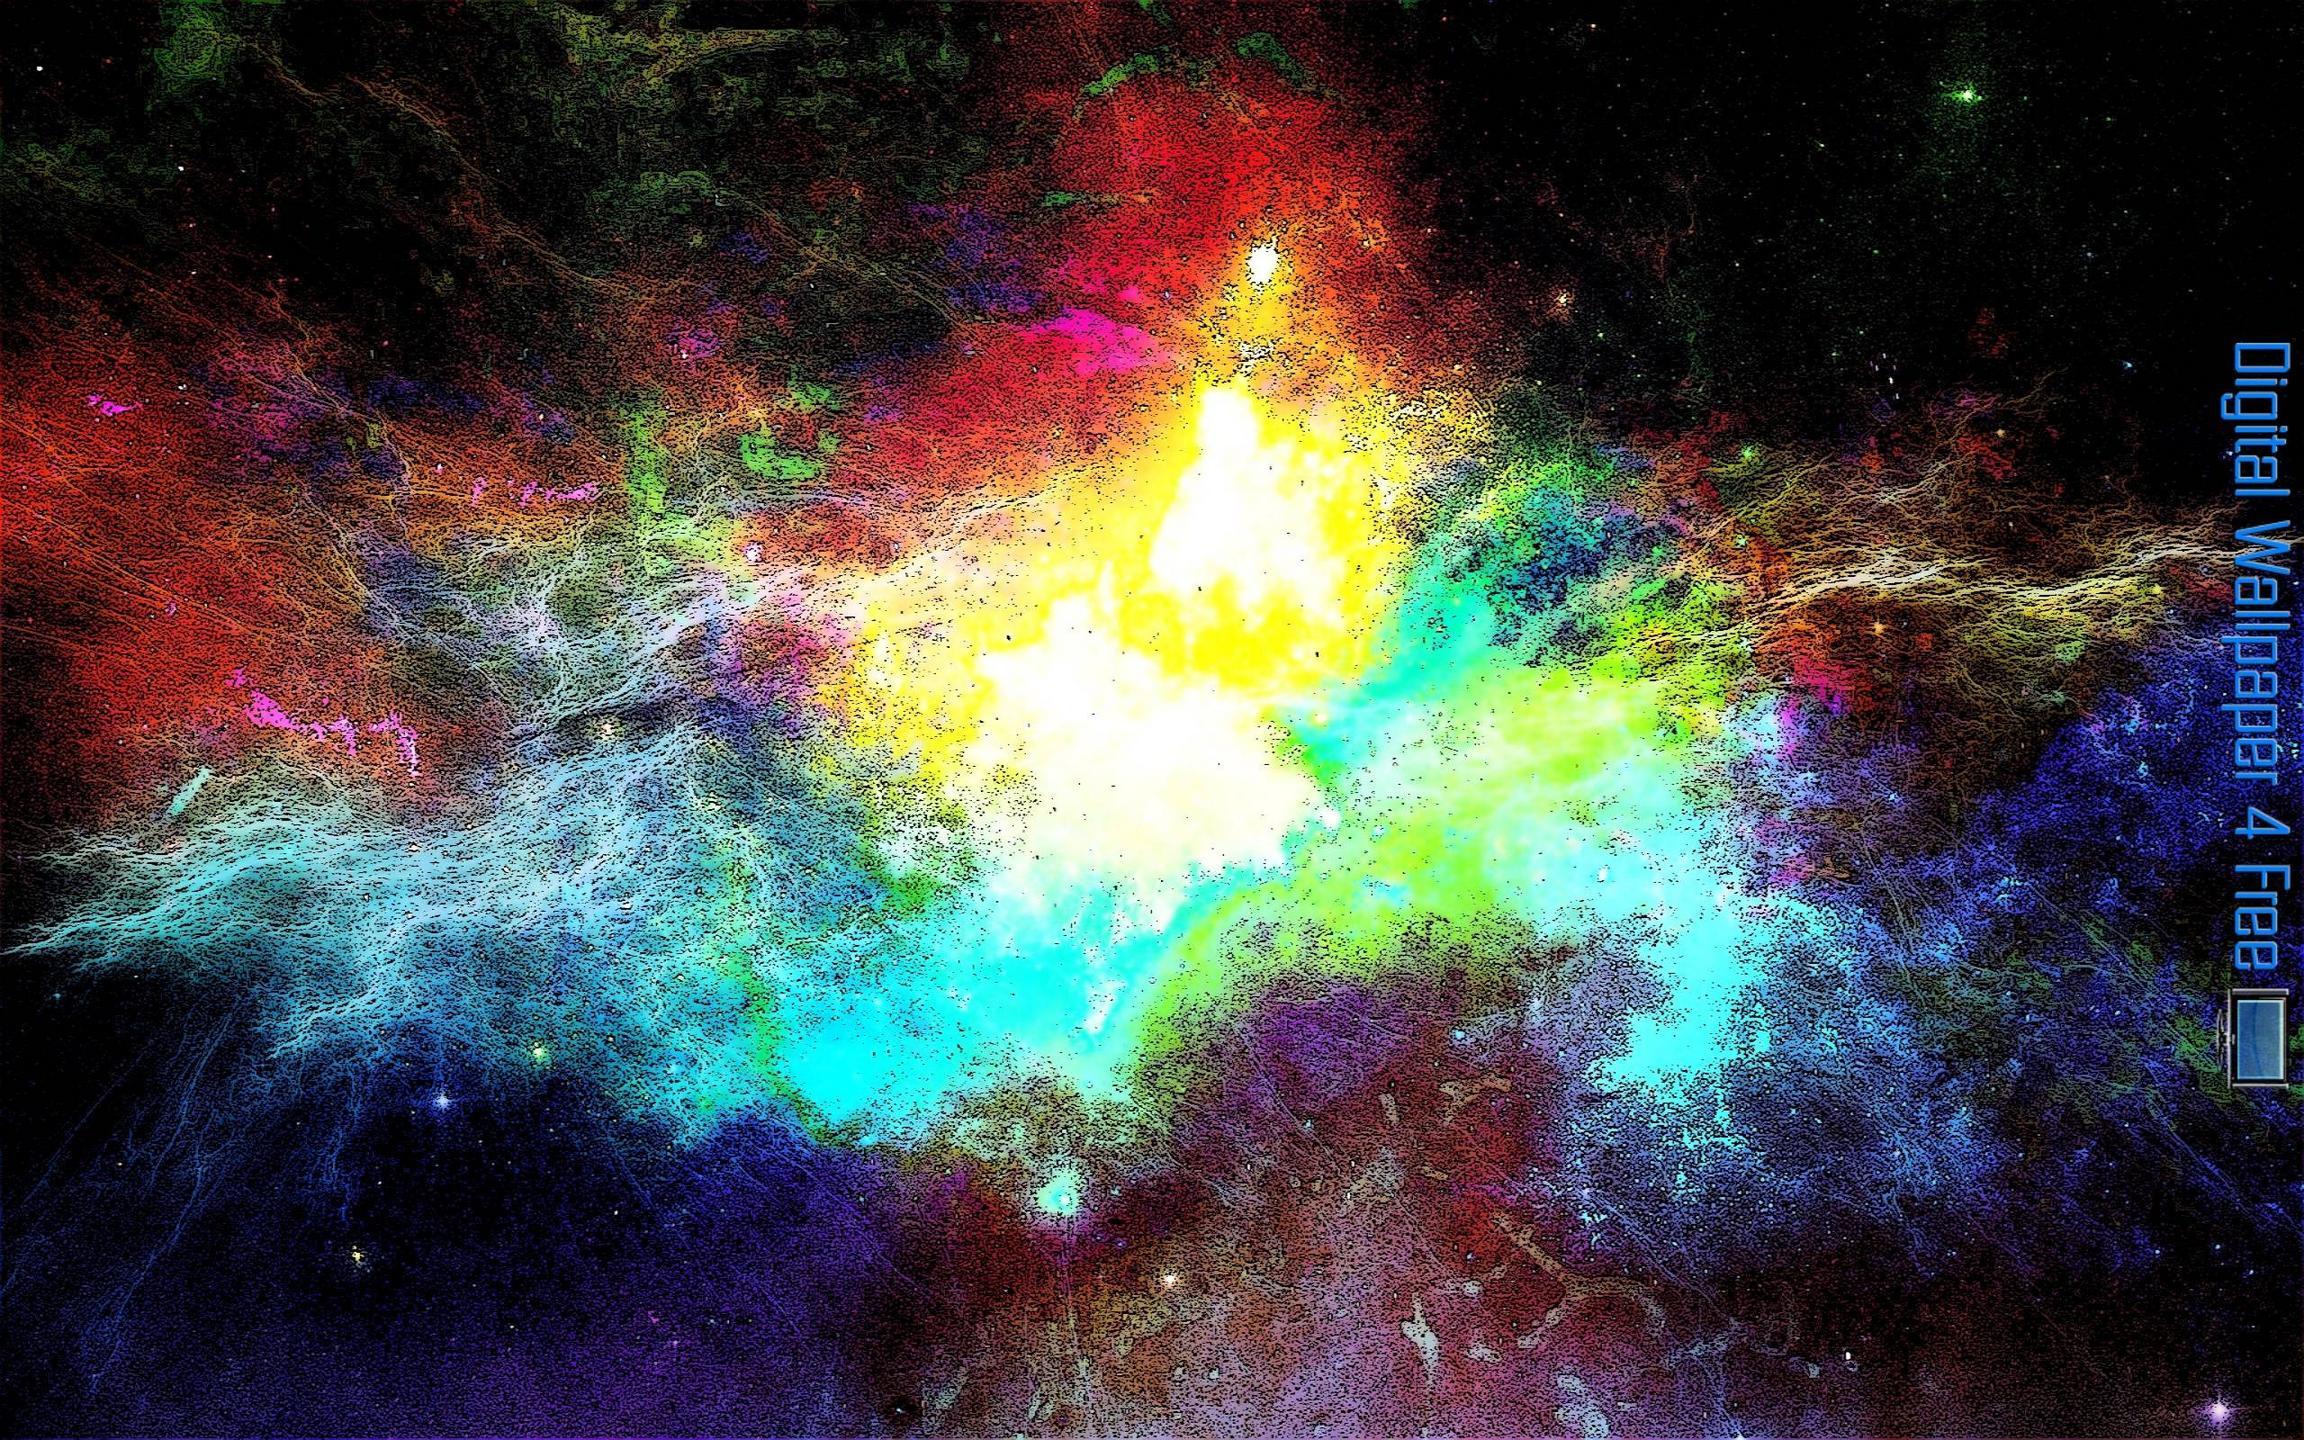 Rainbow Explosion Wallpaper